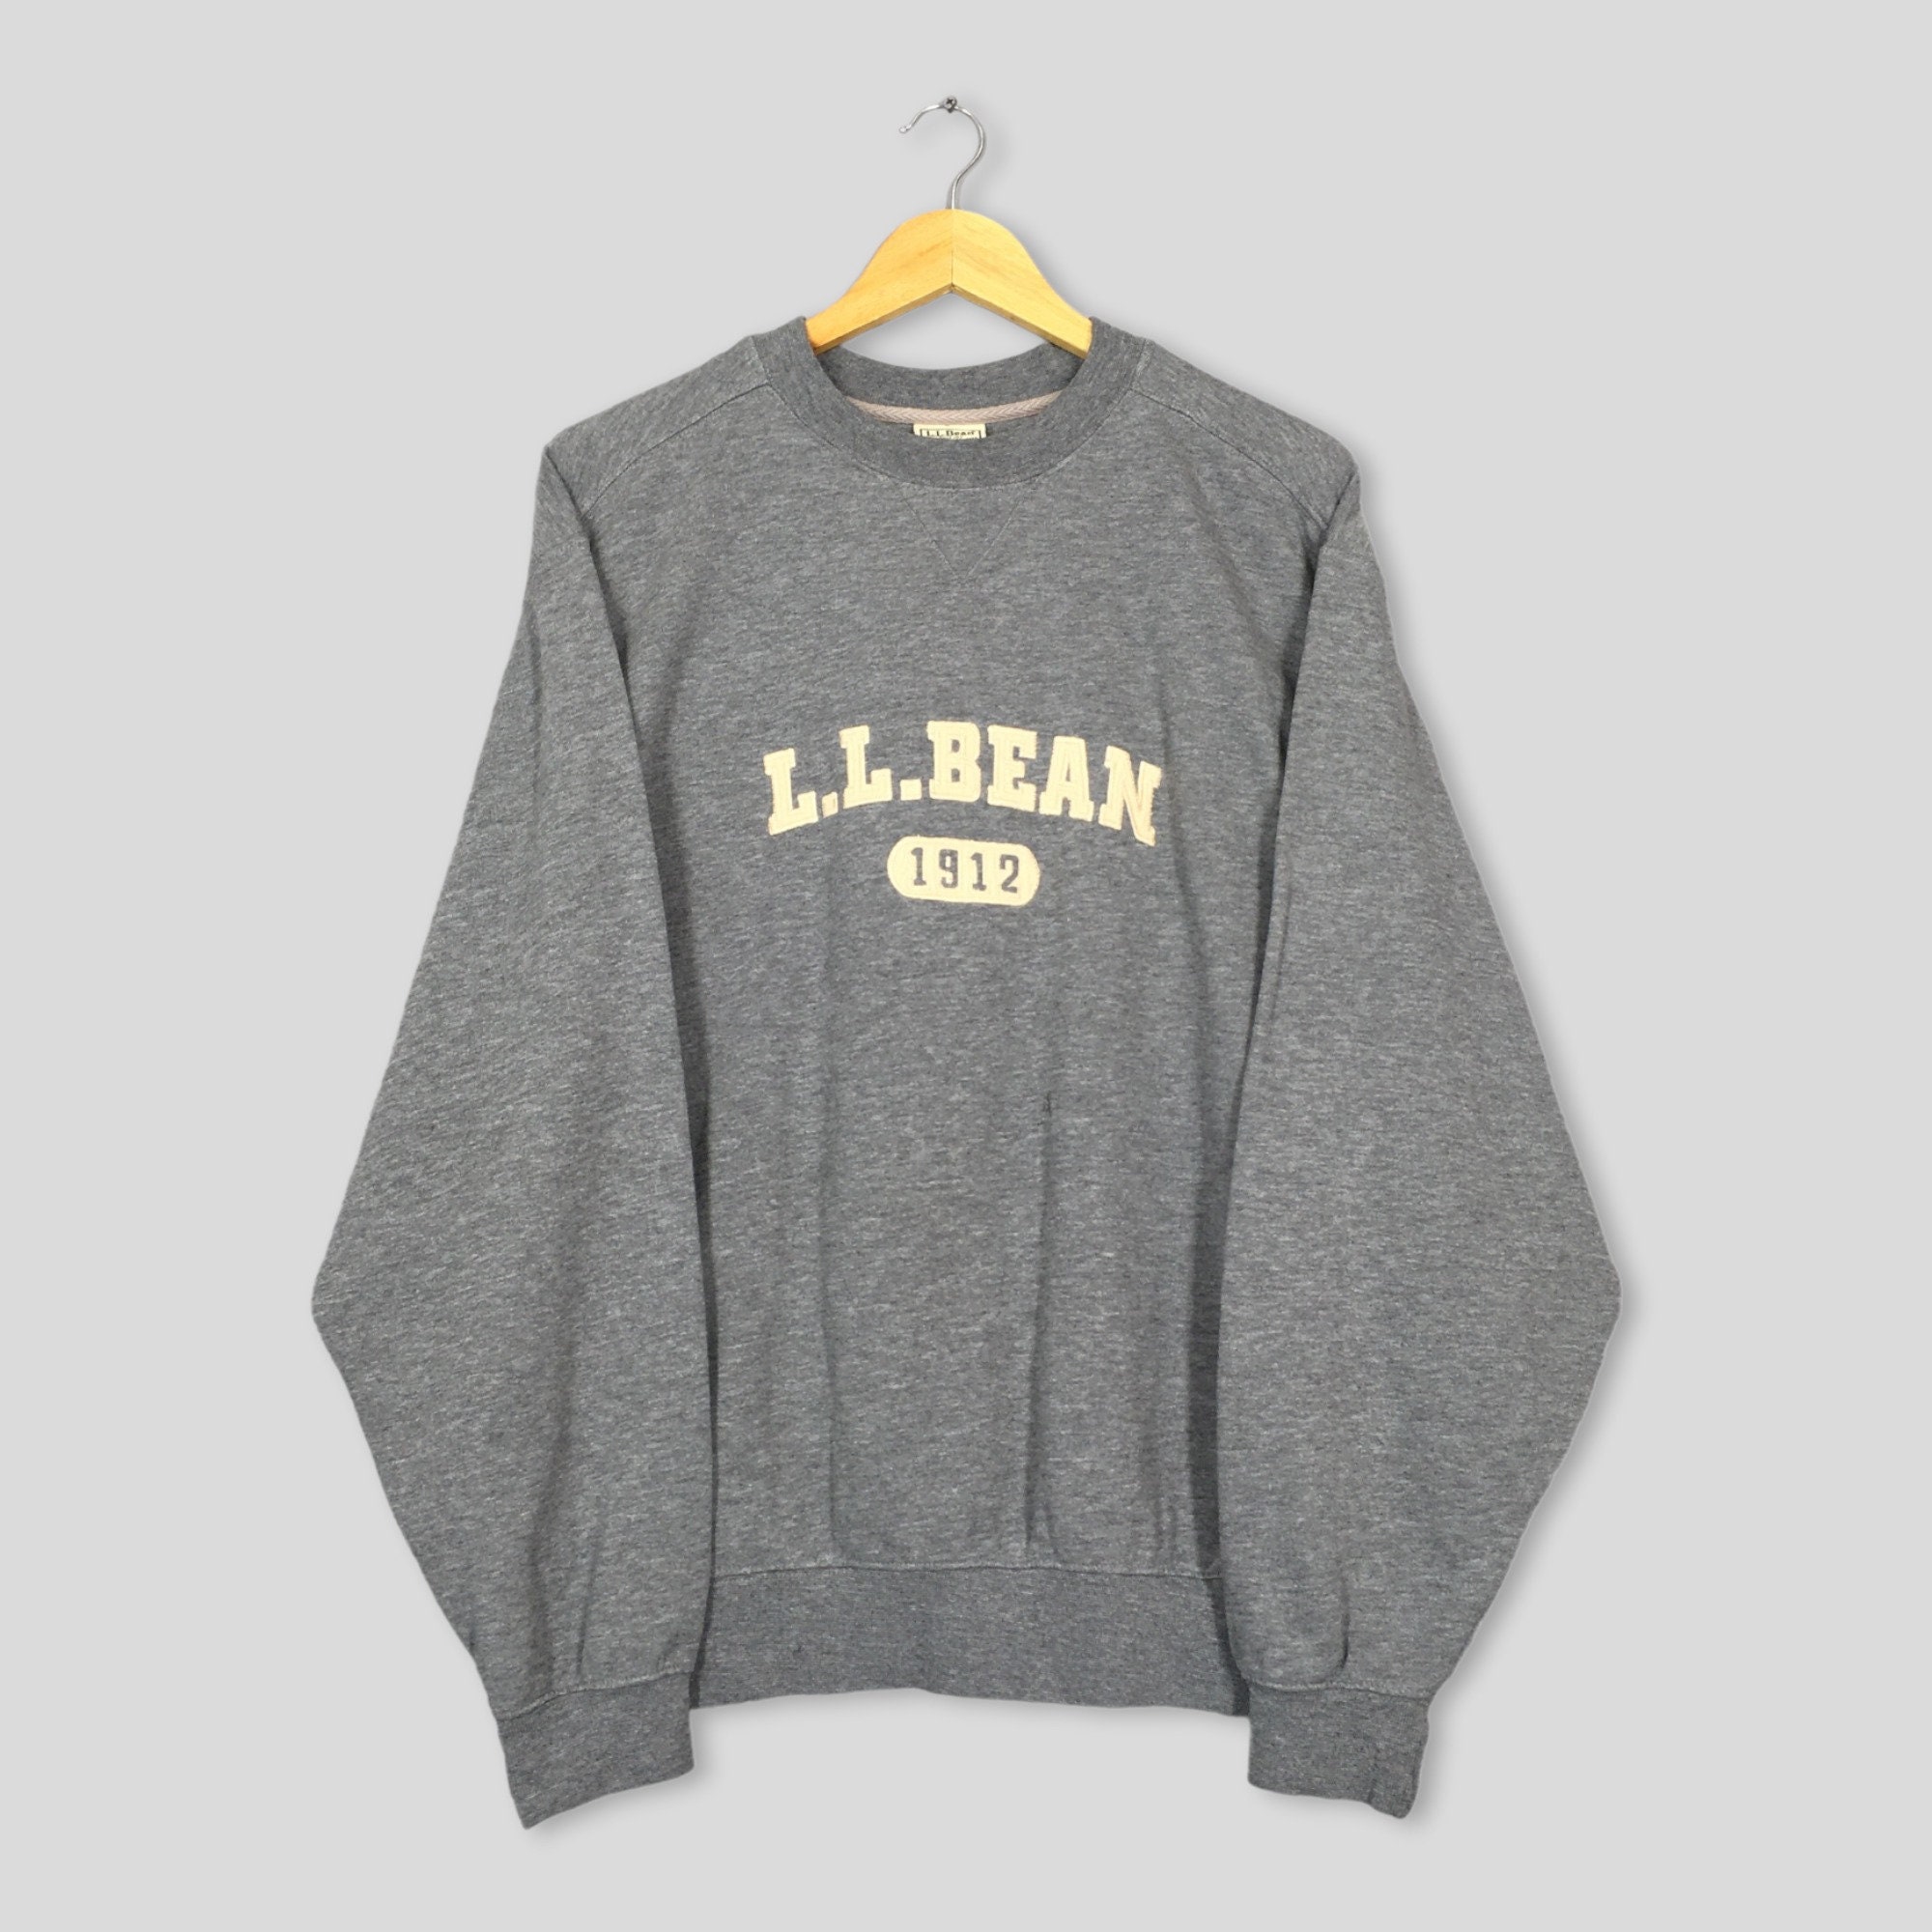 L.L.Bean Women's Long-Sleeve Crewneck Tee